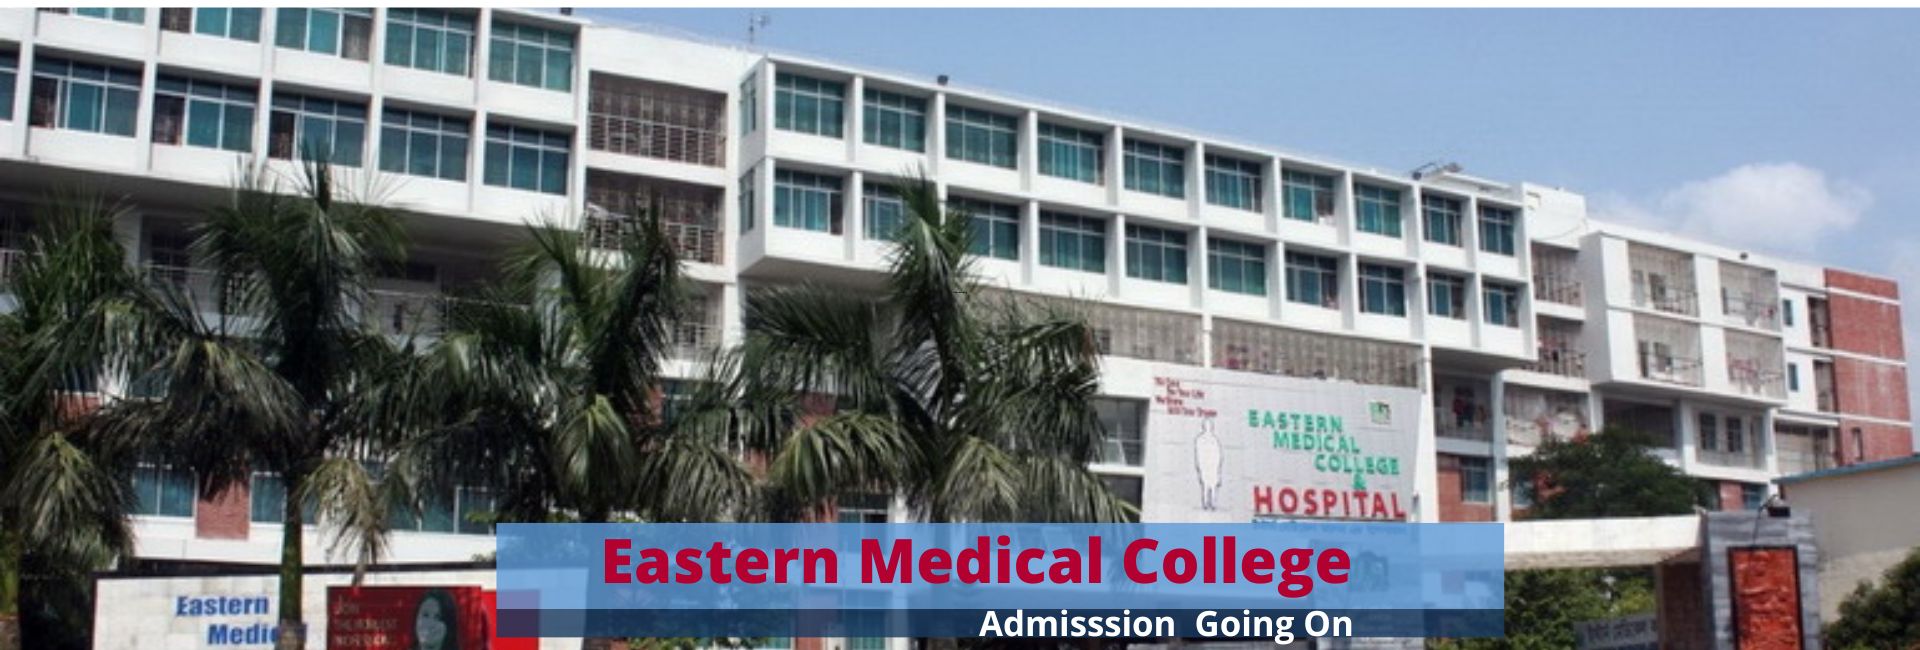 Eastern Medical College